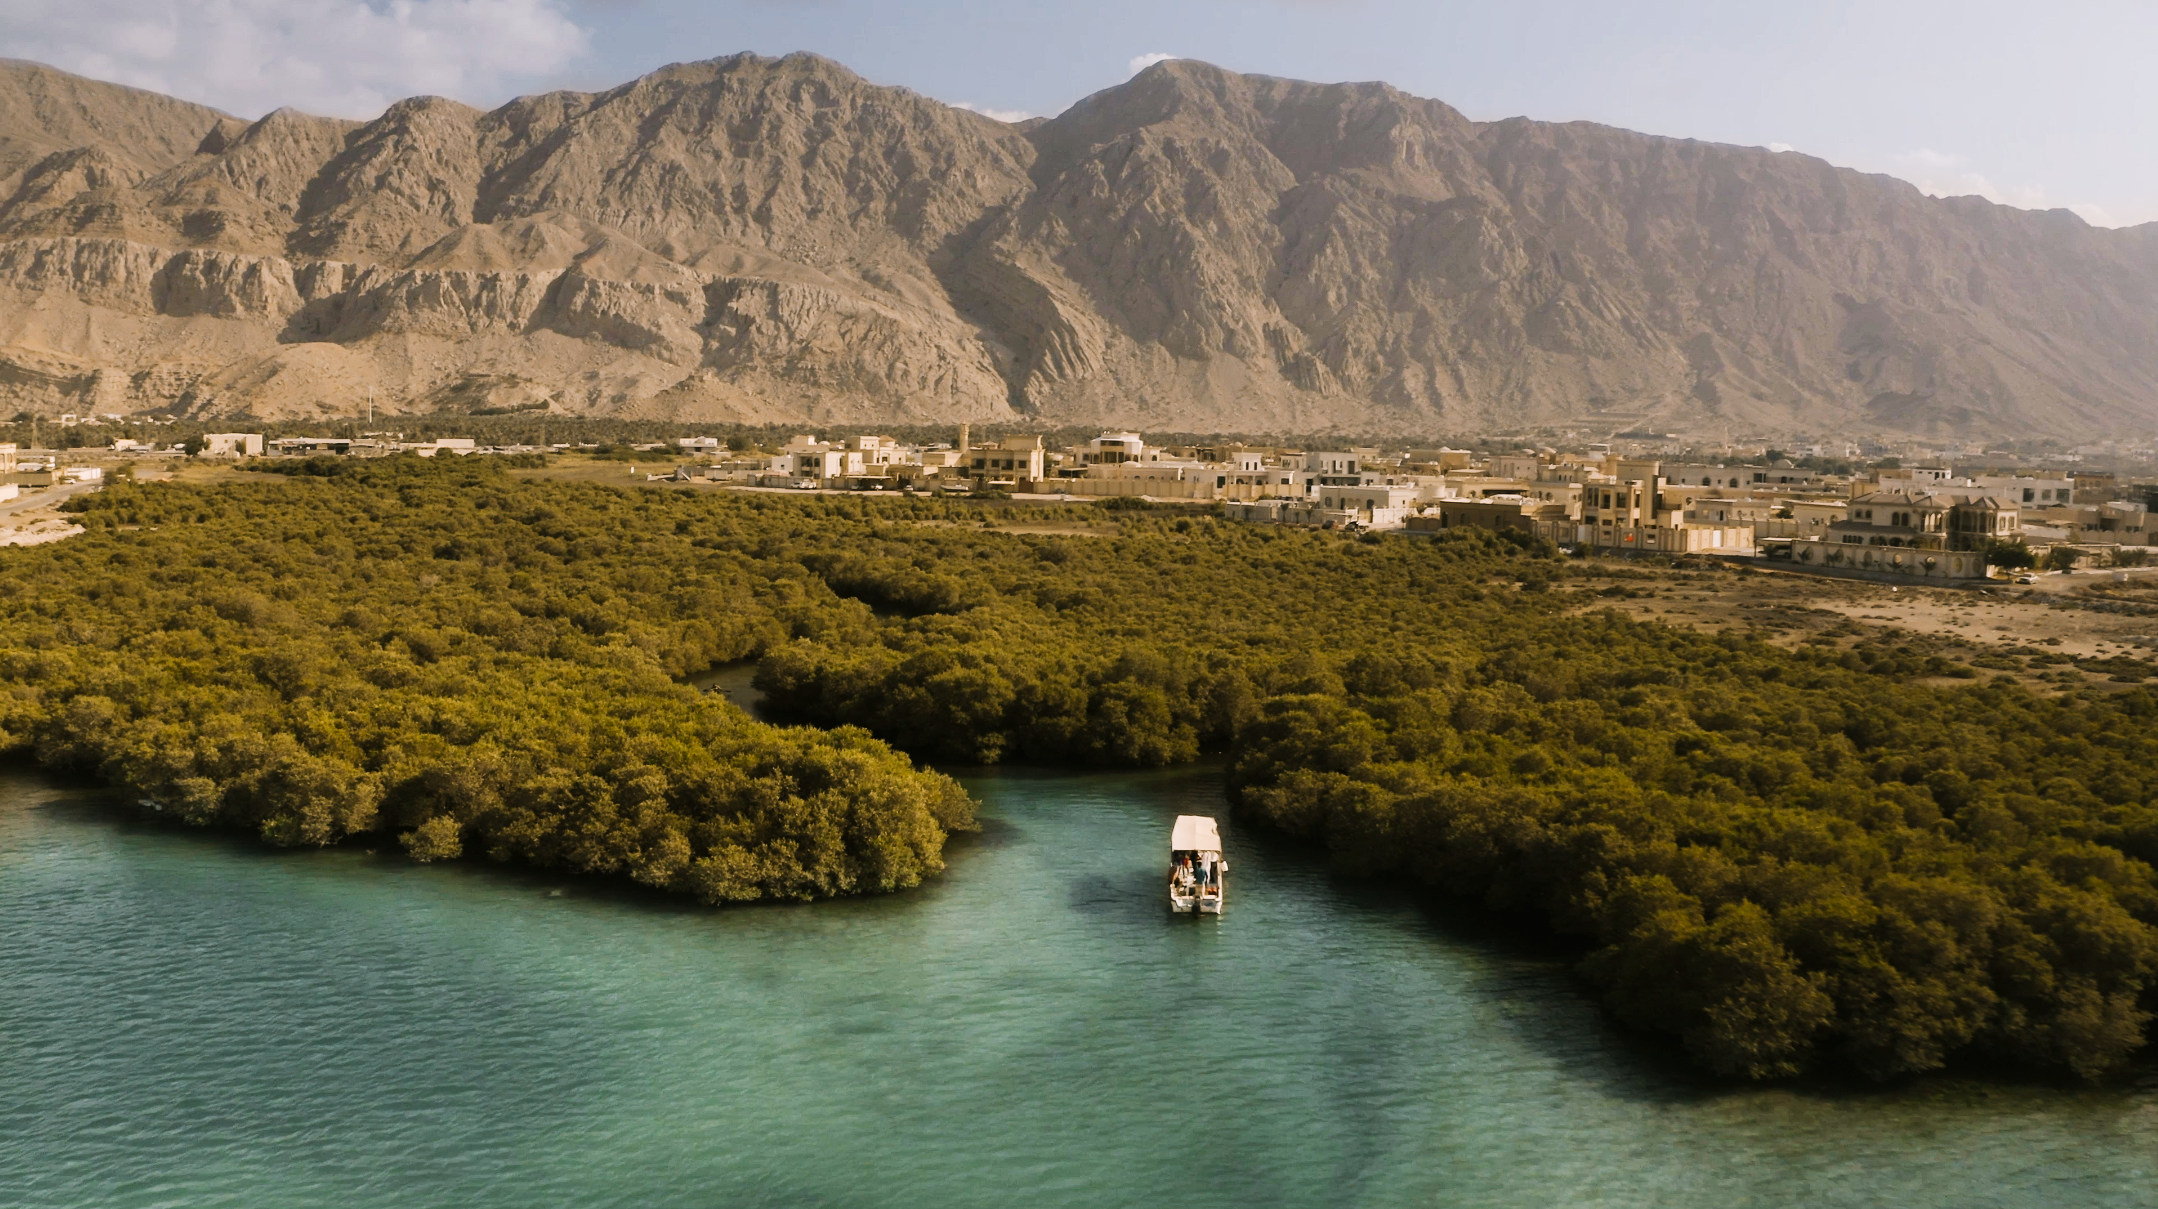 Ras Al Khaimah Tourism adopts ‘Balanced Tourism’ approach to lead sustainability